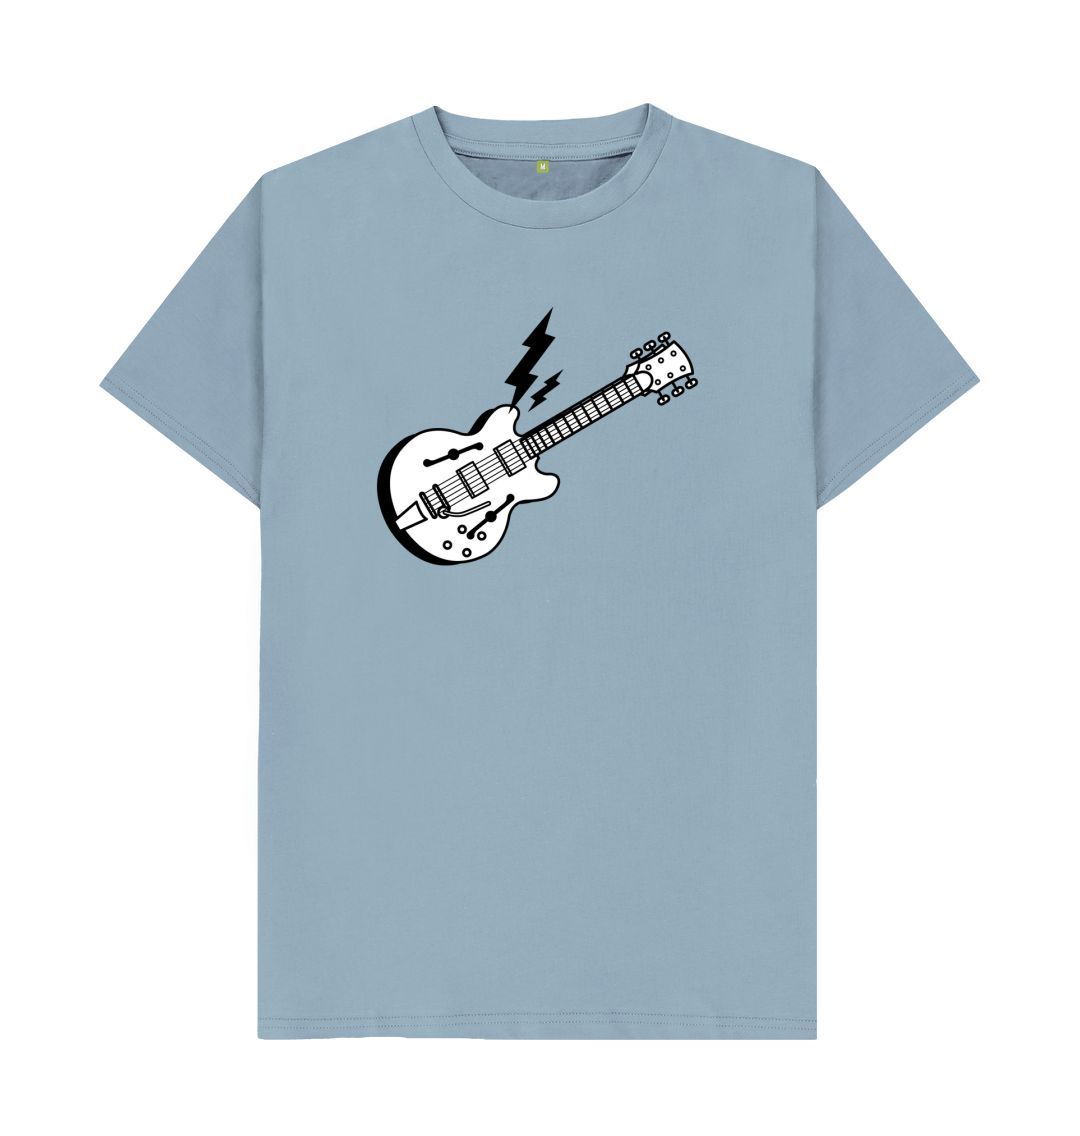 Hollow Body Guitar Lightning Print T-Shirt Guitar - Sound Shirts